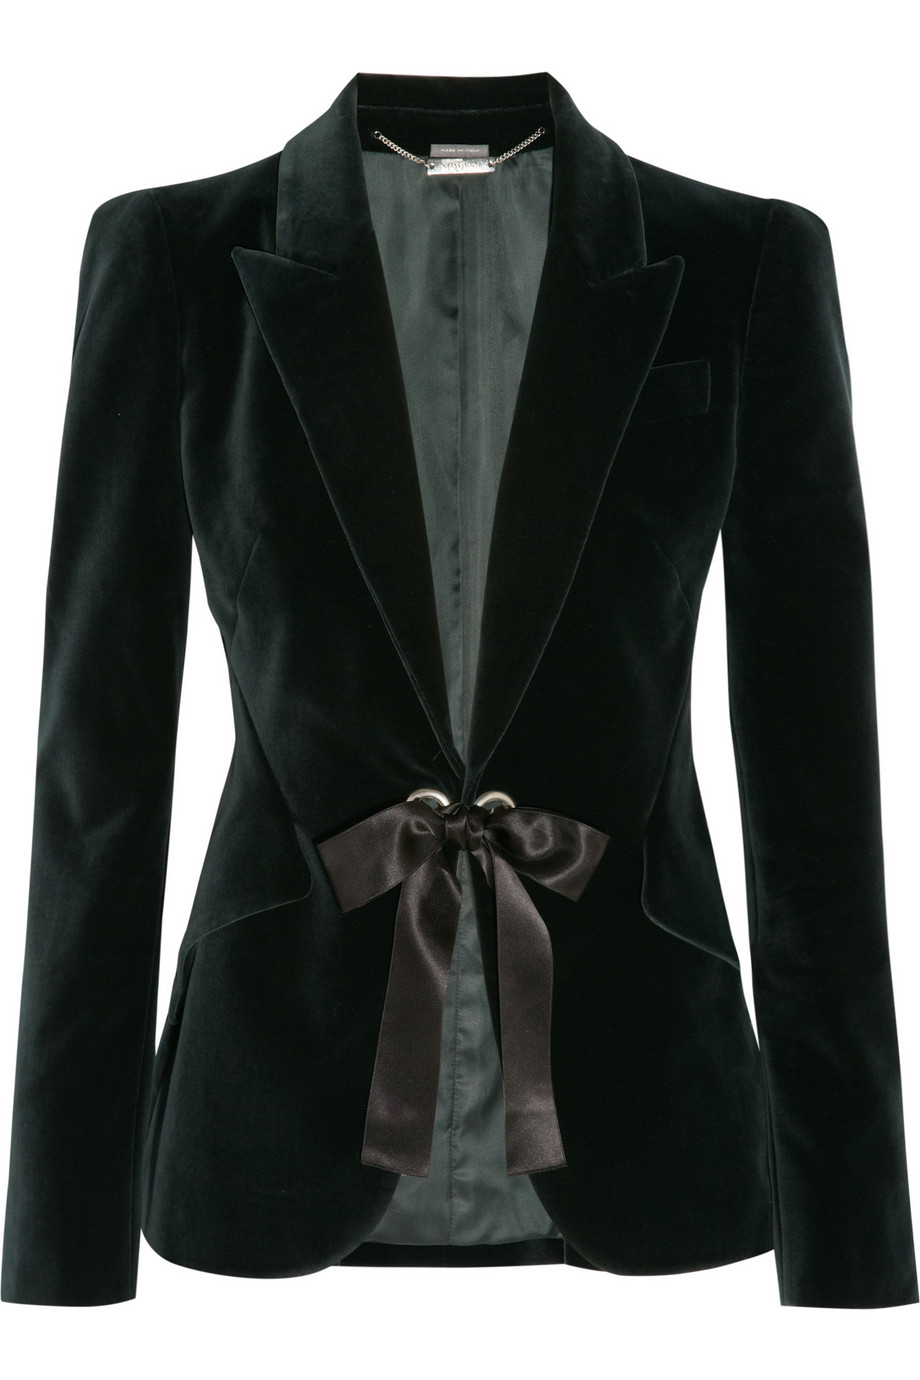 Lyst - Alexander mcqueen Ribbon-trimmed Velvet Jacket in Green